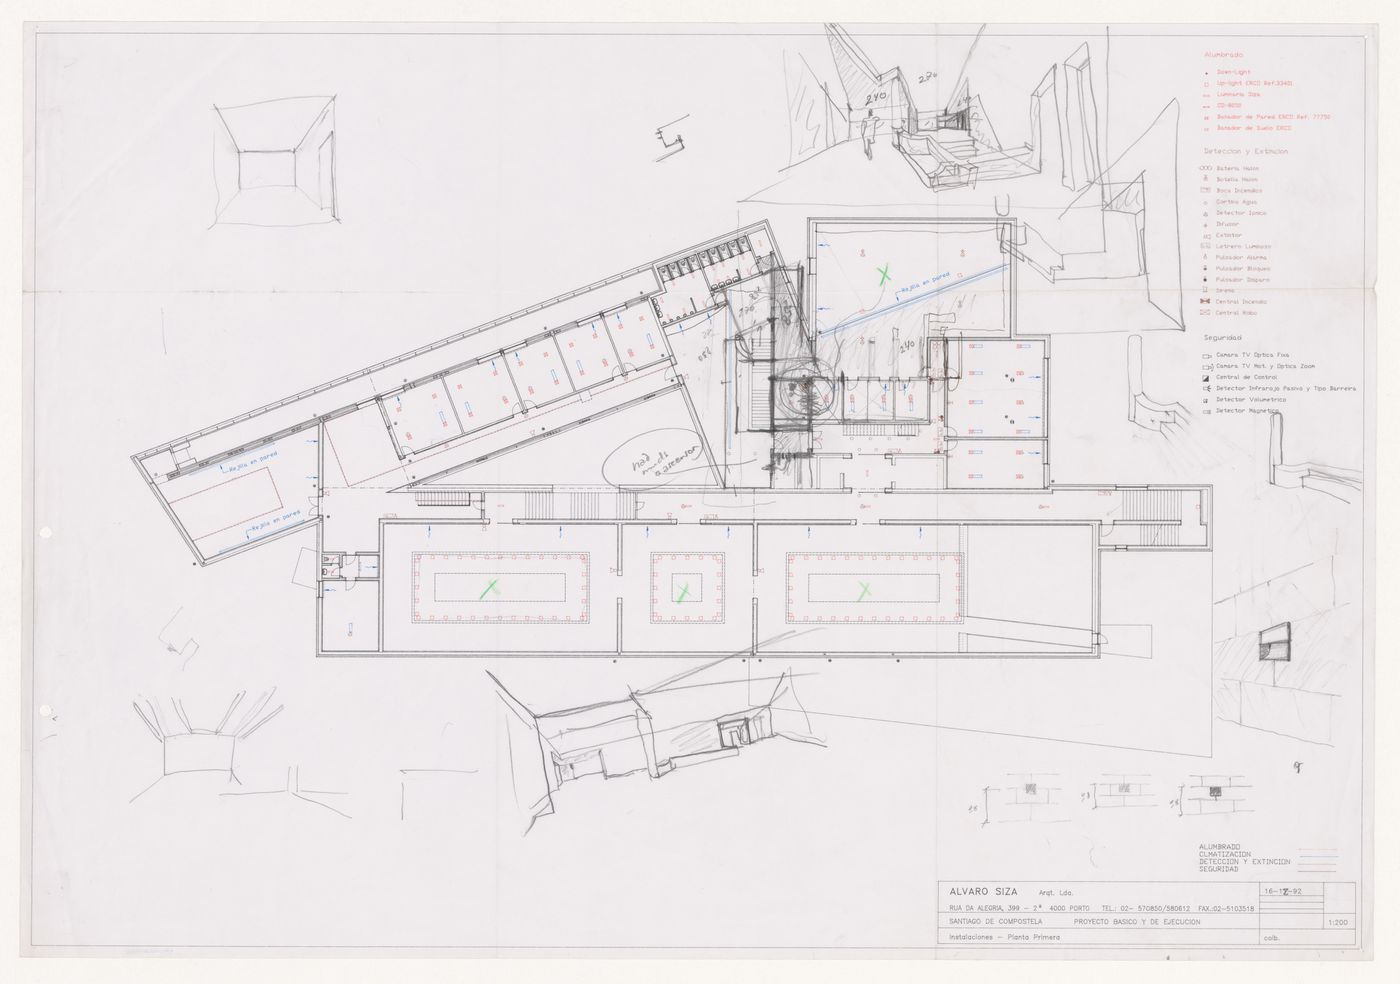 First floor plan and sketches for Centro Galego de Arte Contemporânea [Galician Centre of Contemporary Art], Santiago de Compostela, Spain